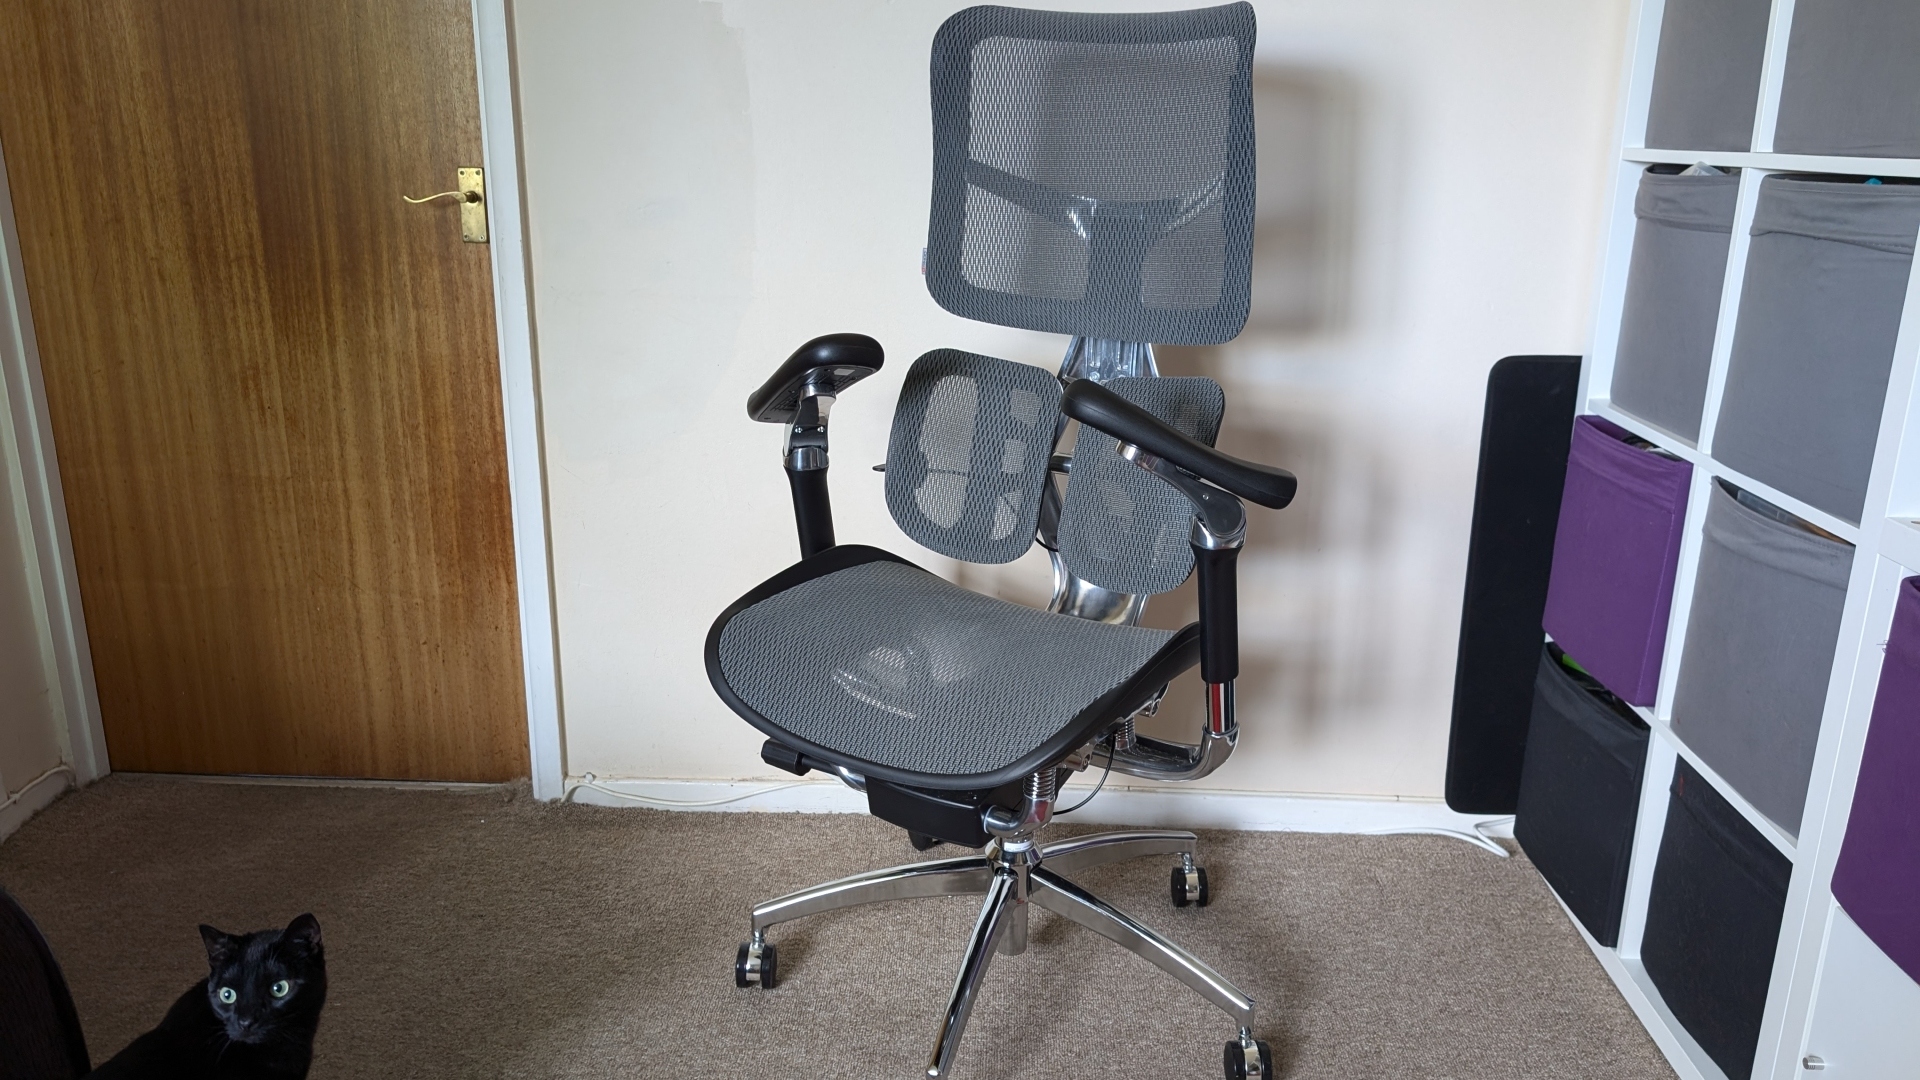 Sihoo Doro S300 ergonomic office chair review